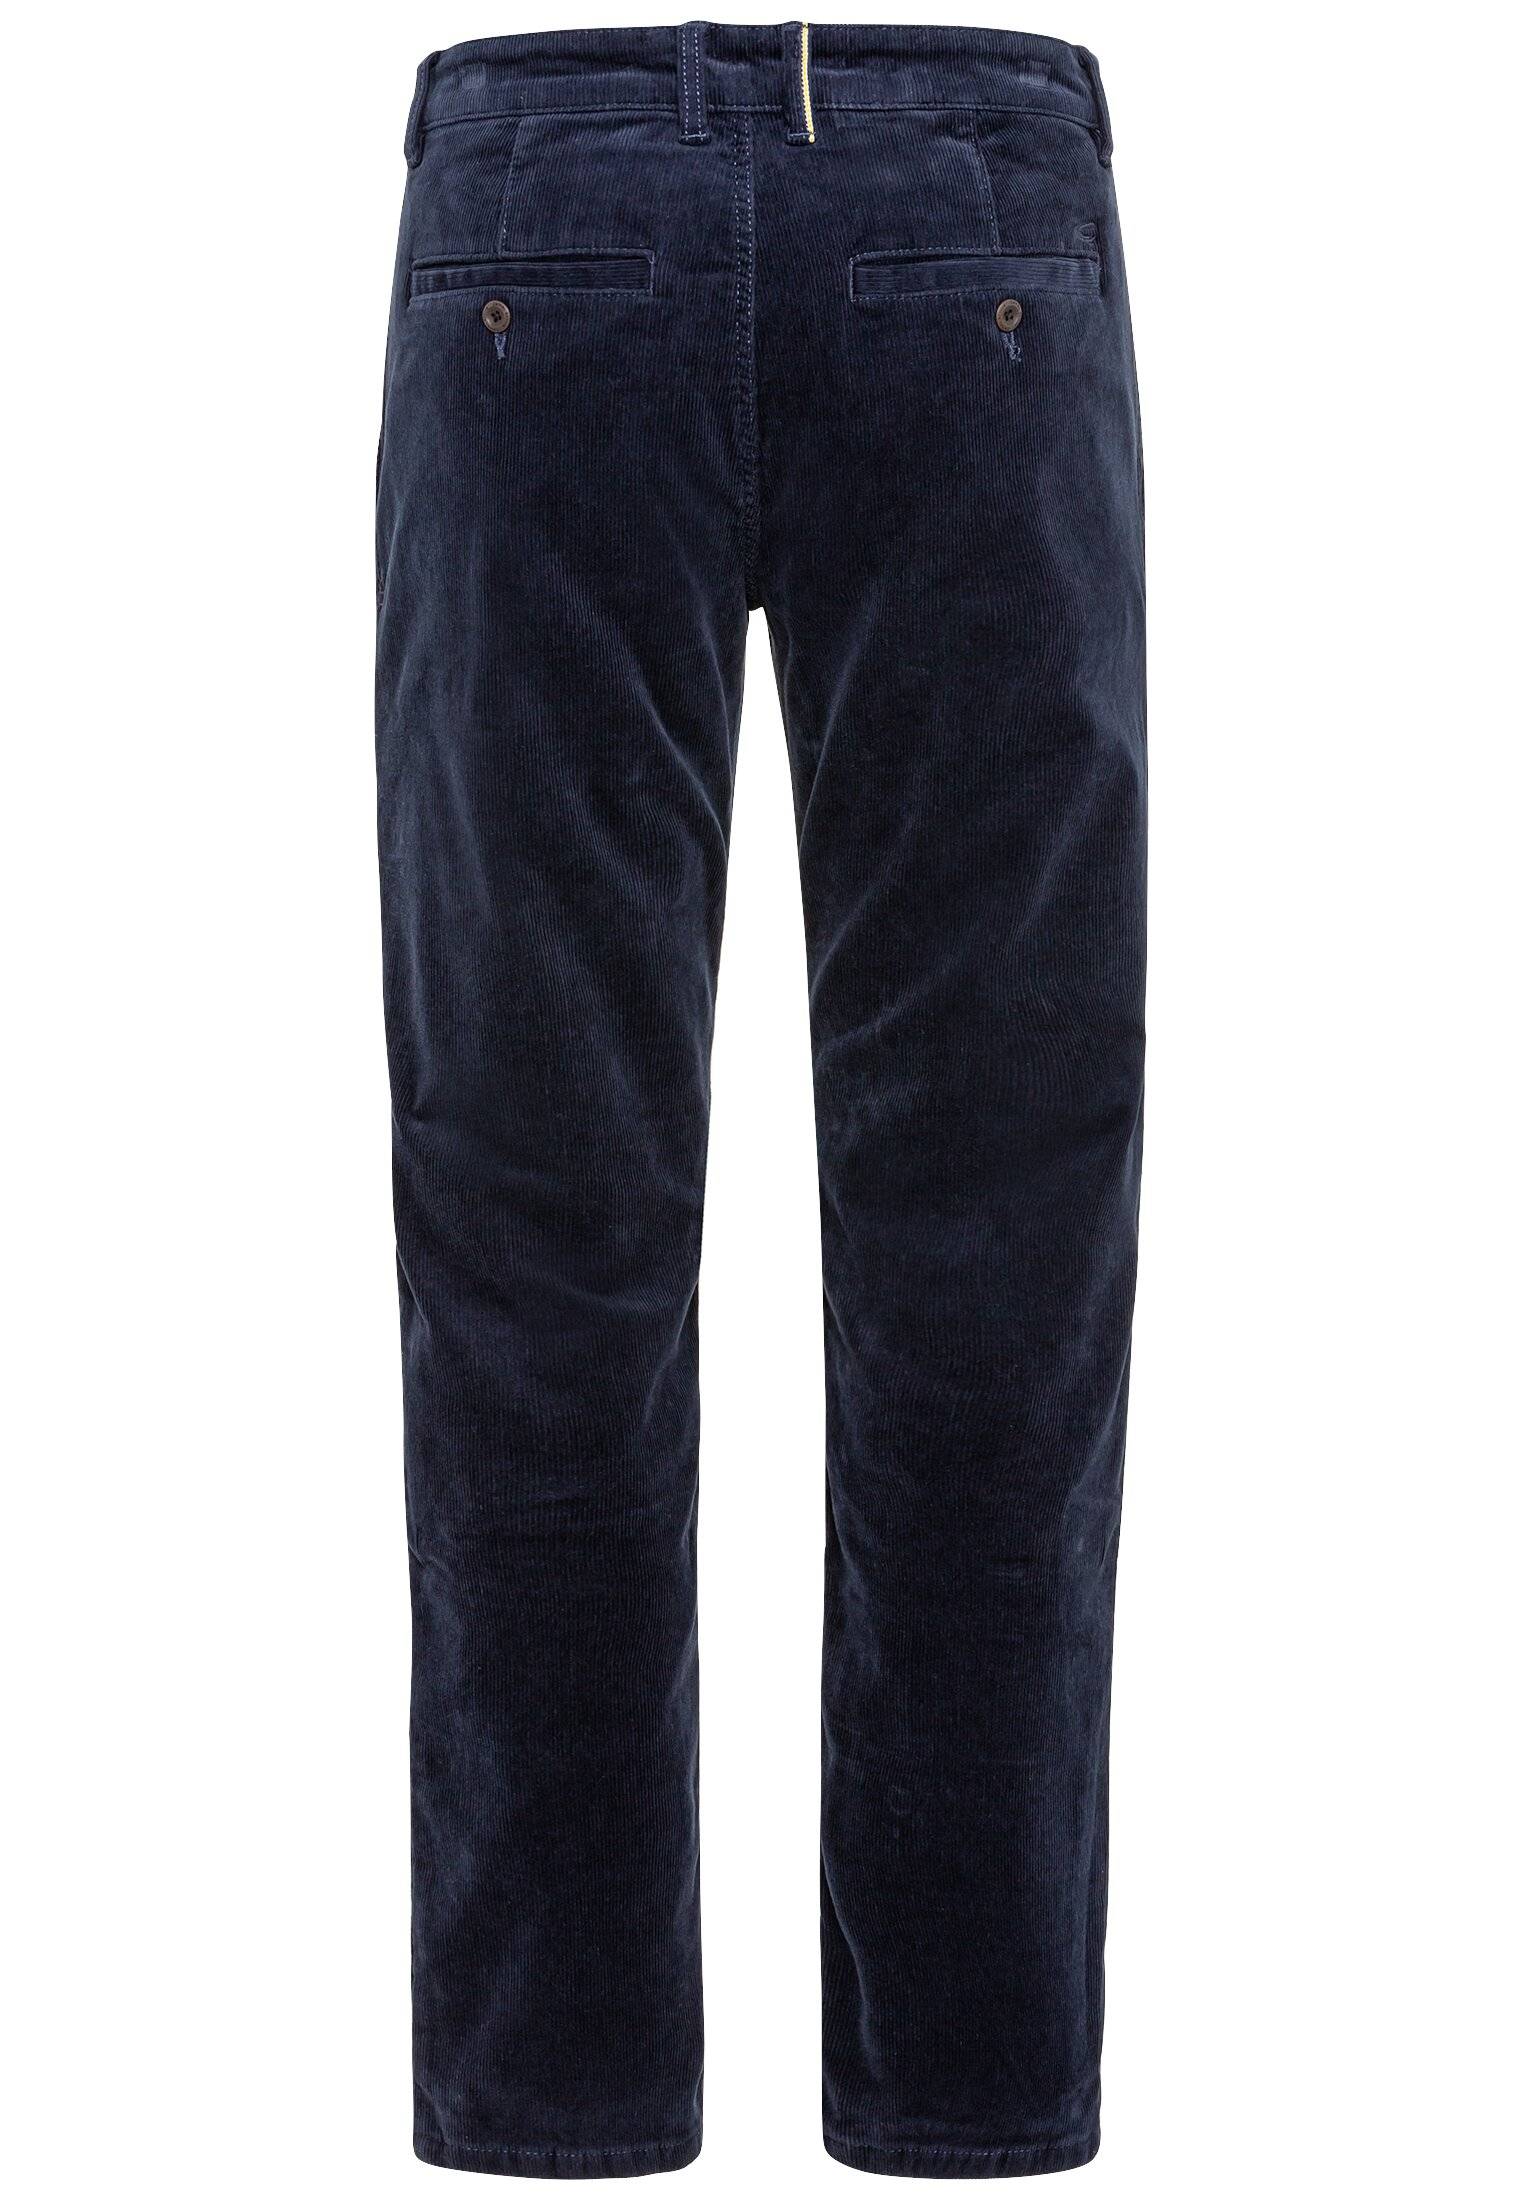 Мужские брюки Camel Active, синие, цвет синий, размер 36 - фото 2